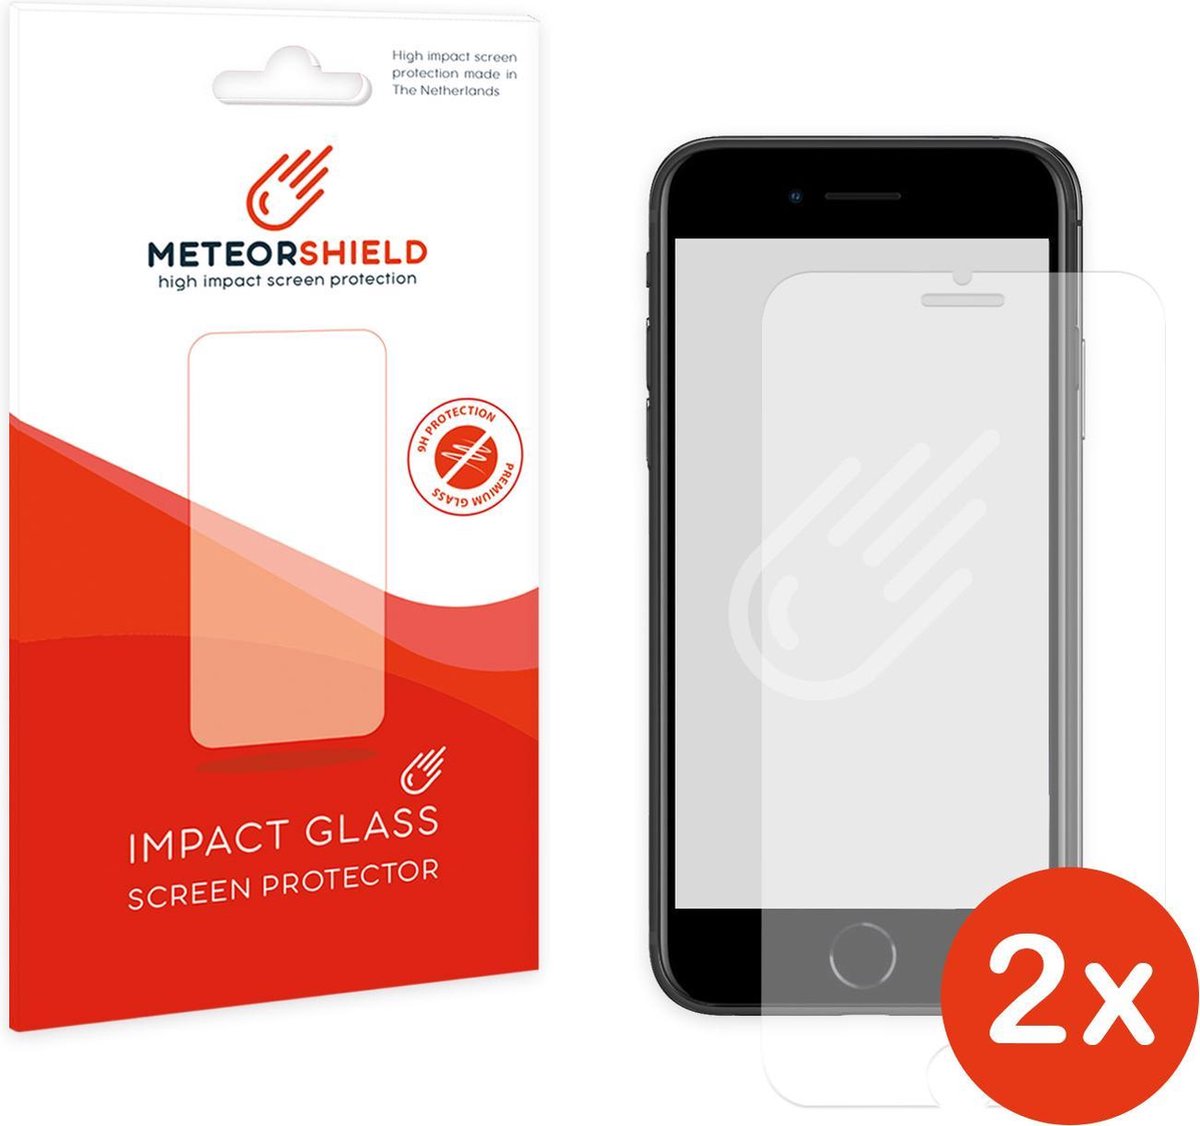 2 stuks: Meteorshield iPhone 8 screenprotector - Ultra clear impact glass